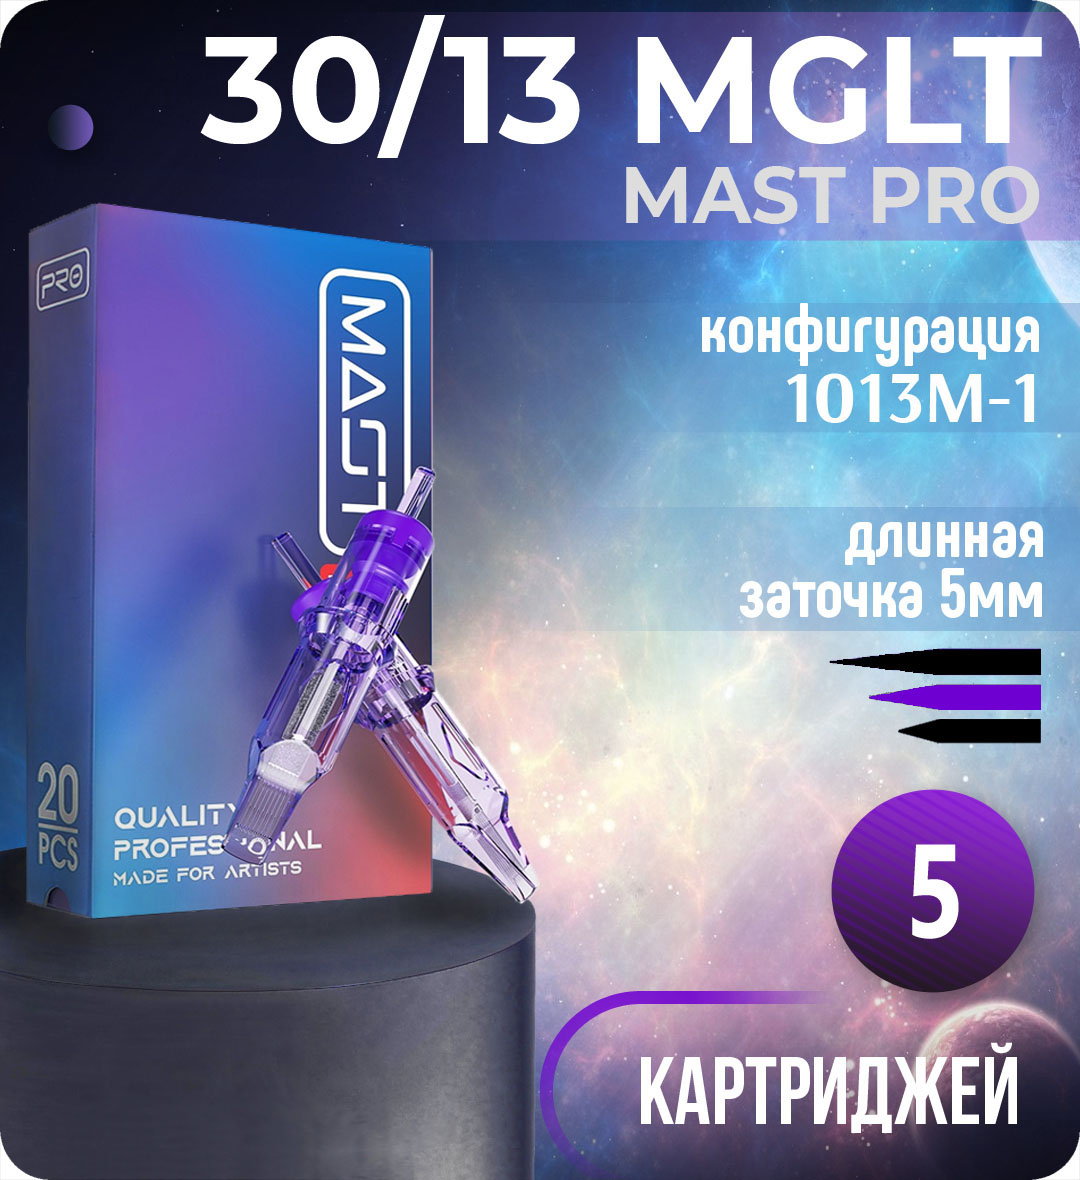 Картриджи Mast Pro 30/13 MGLT (1013M-1) для тату, перманентного макияжа и татуажа Dragonhawk 5шт